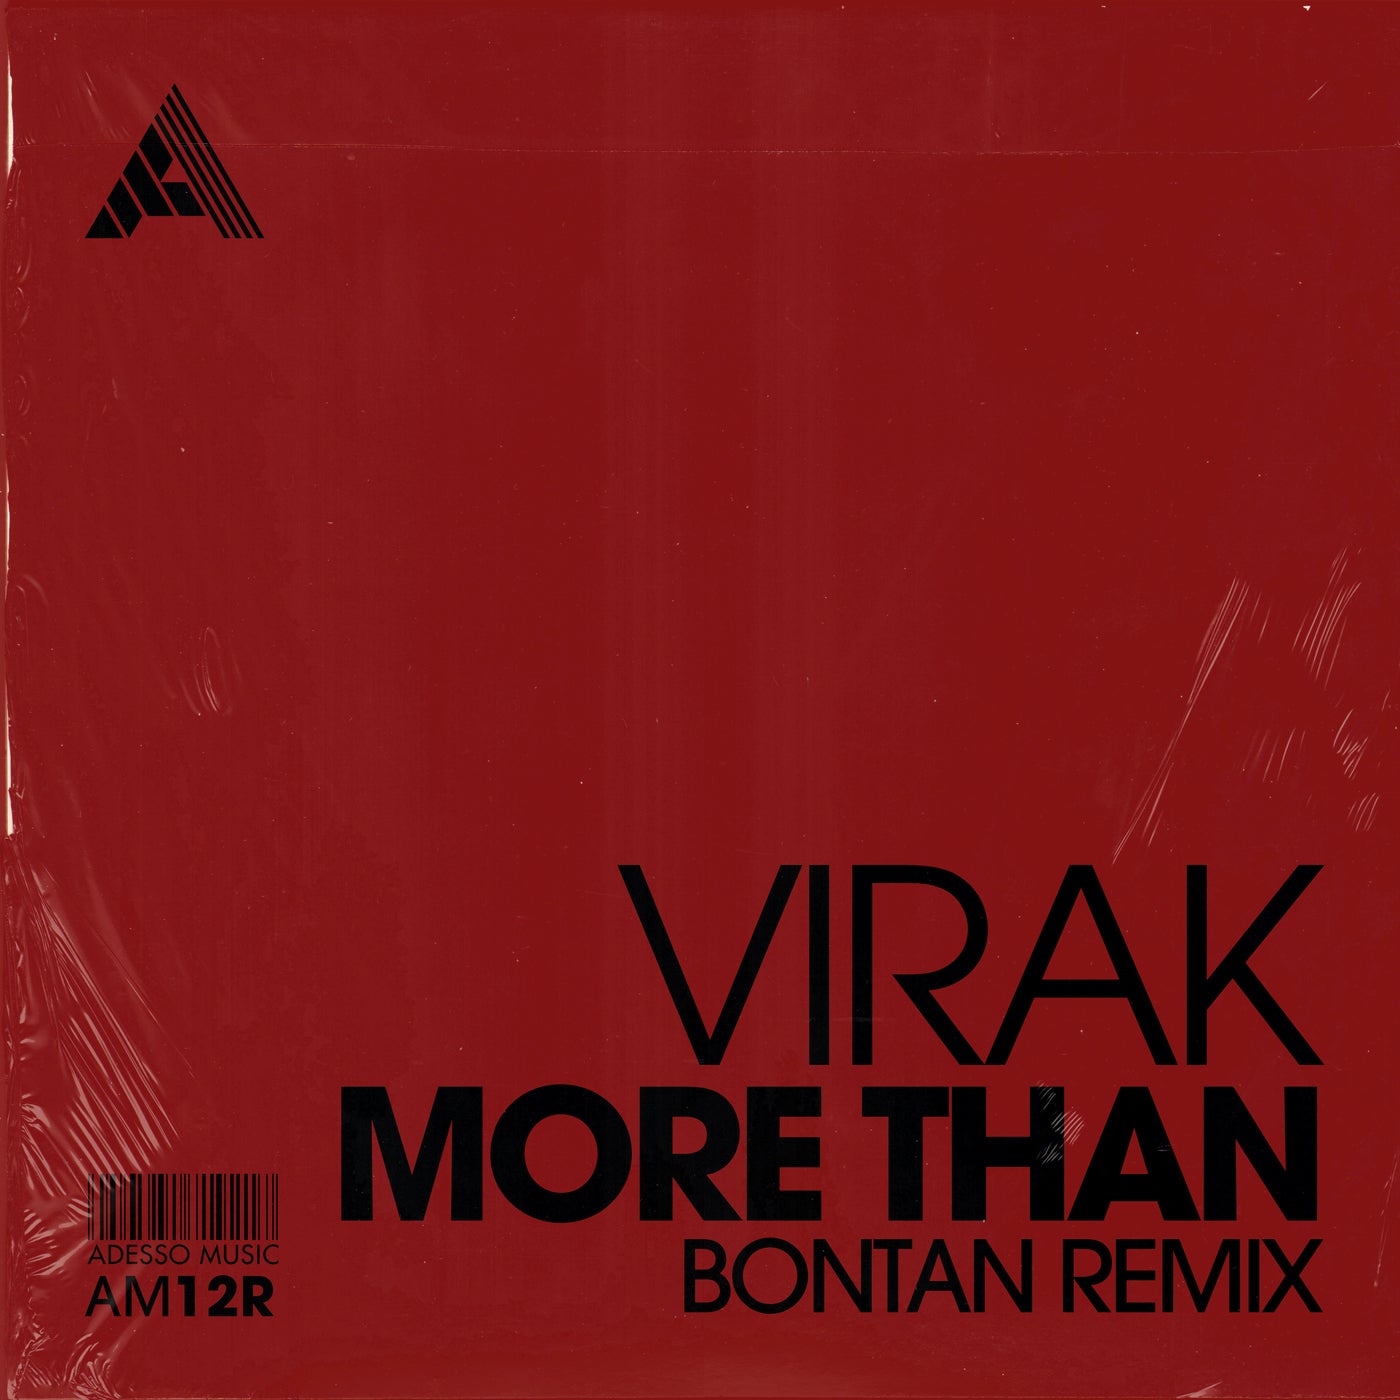 Virak – More Than (Bontan Remix) – Extended Mix [AM12R]